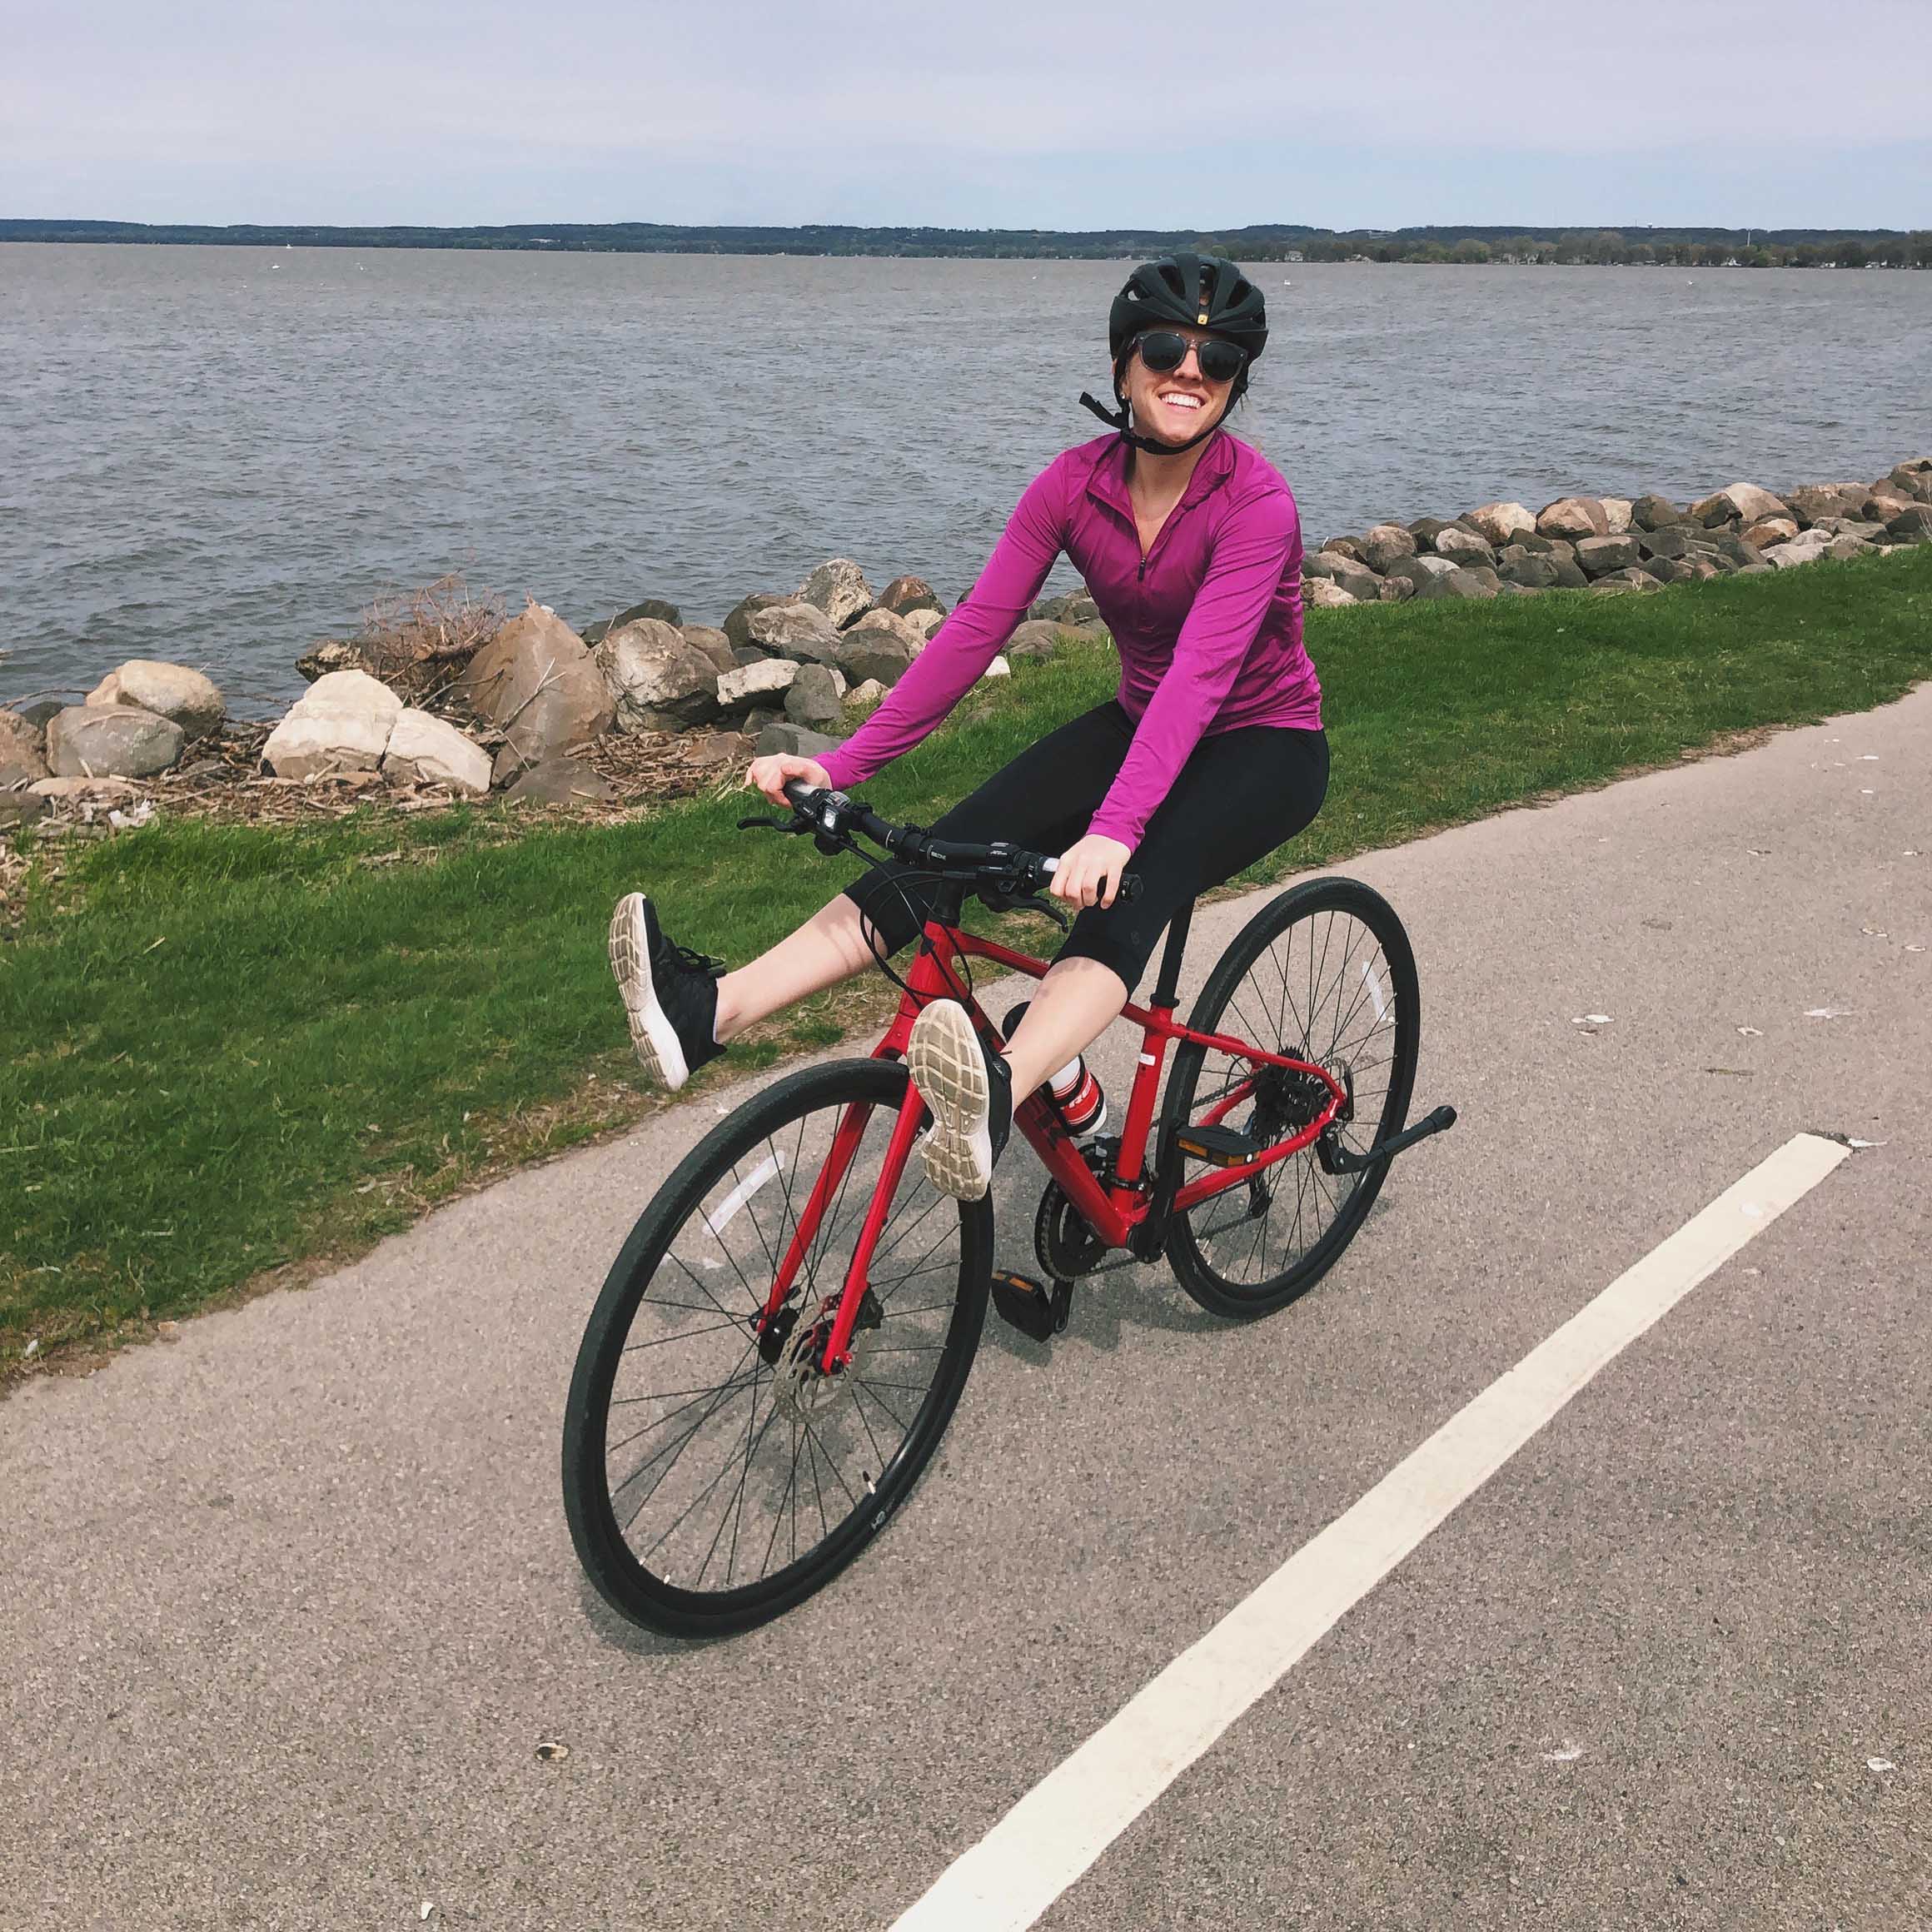 Haley Gustafson is seen riding a bike